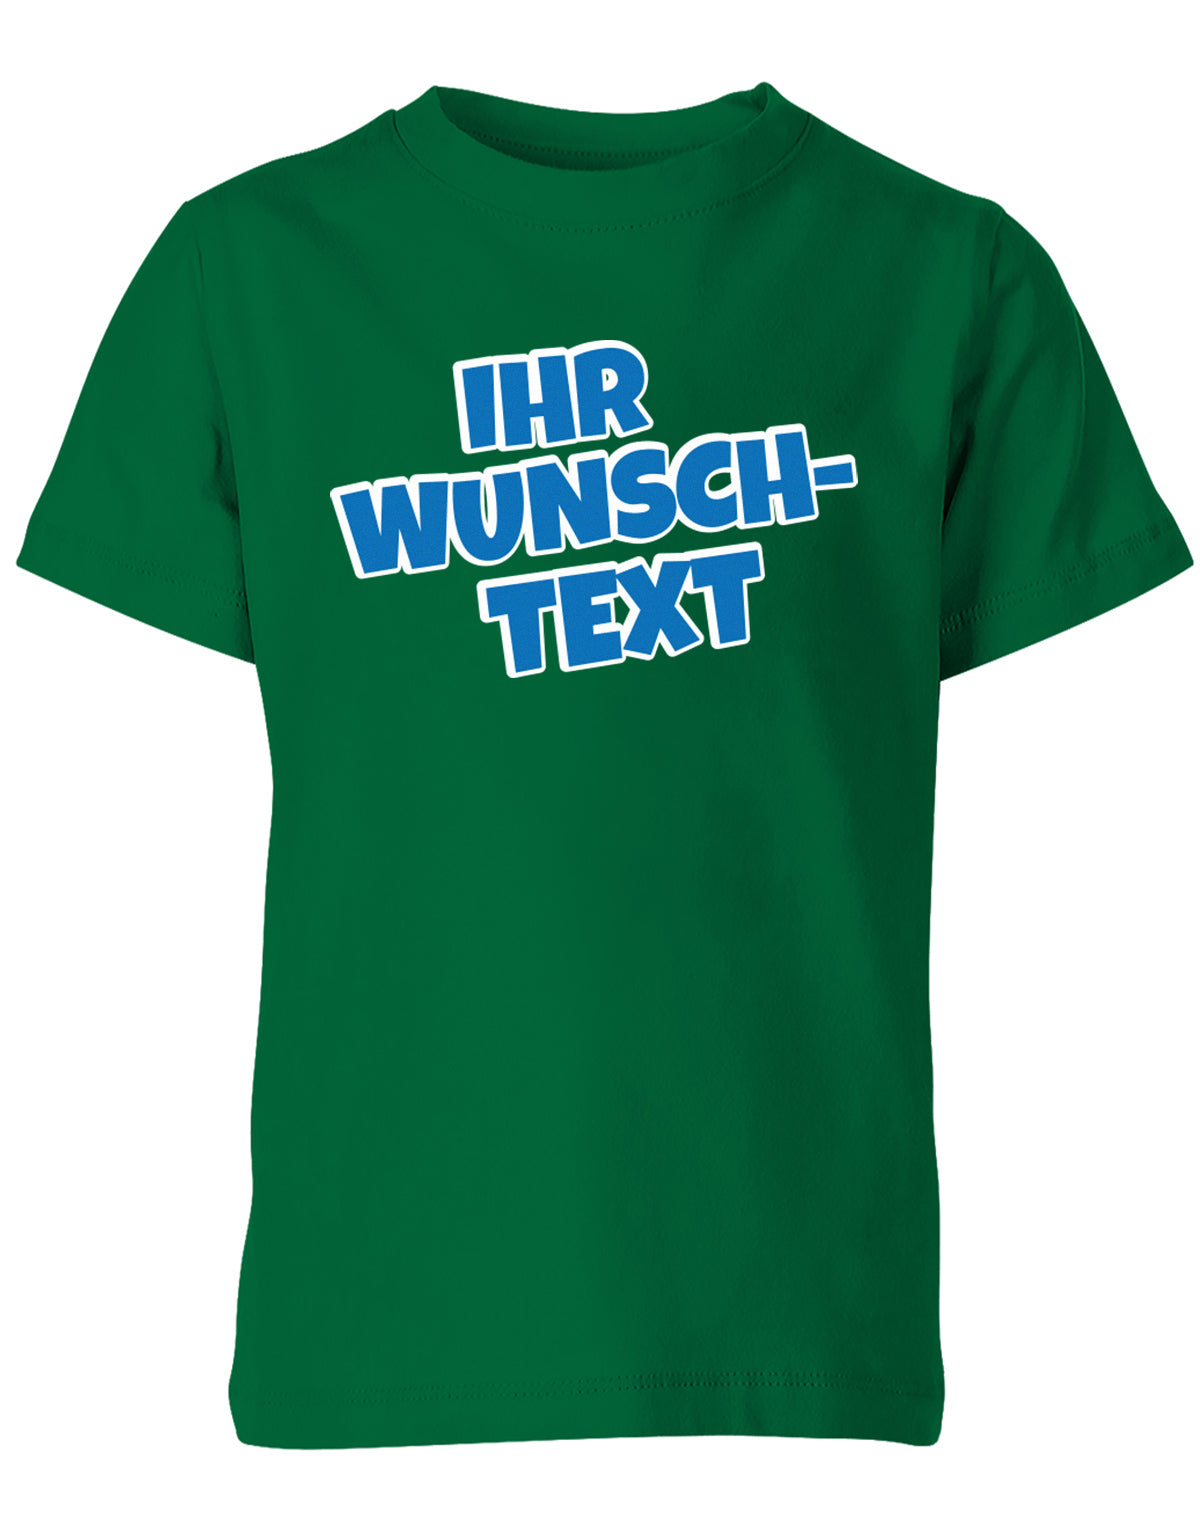 Kinder Tshirt mit Wunschtext.  Comic Schriftart mit weißer Umrandung.  Grün